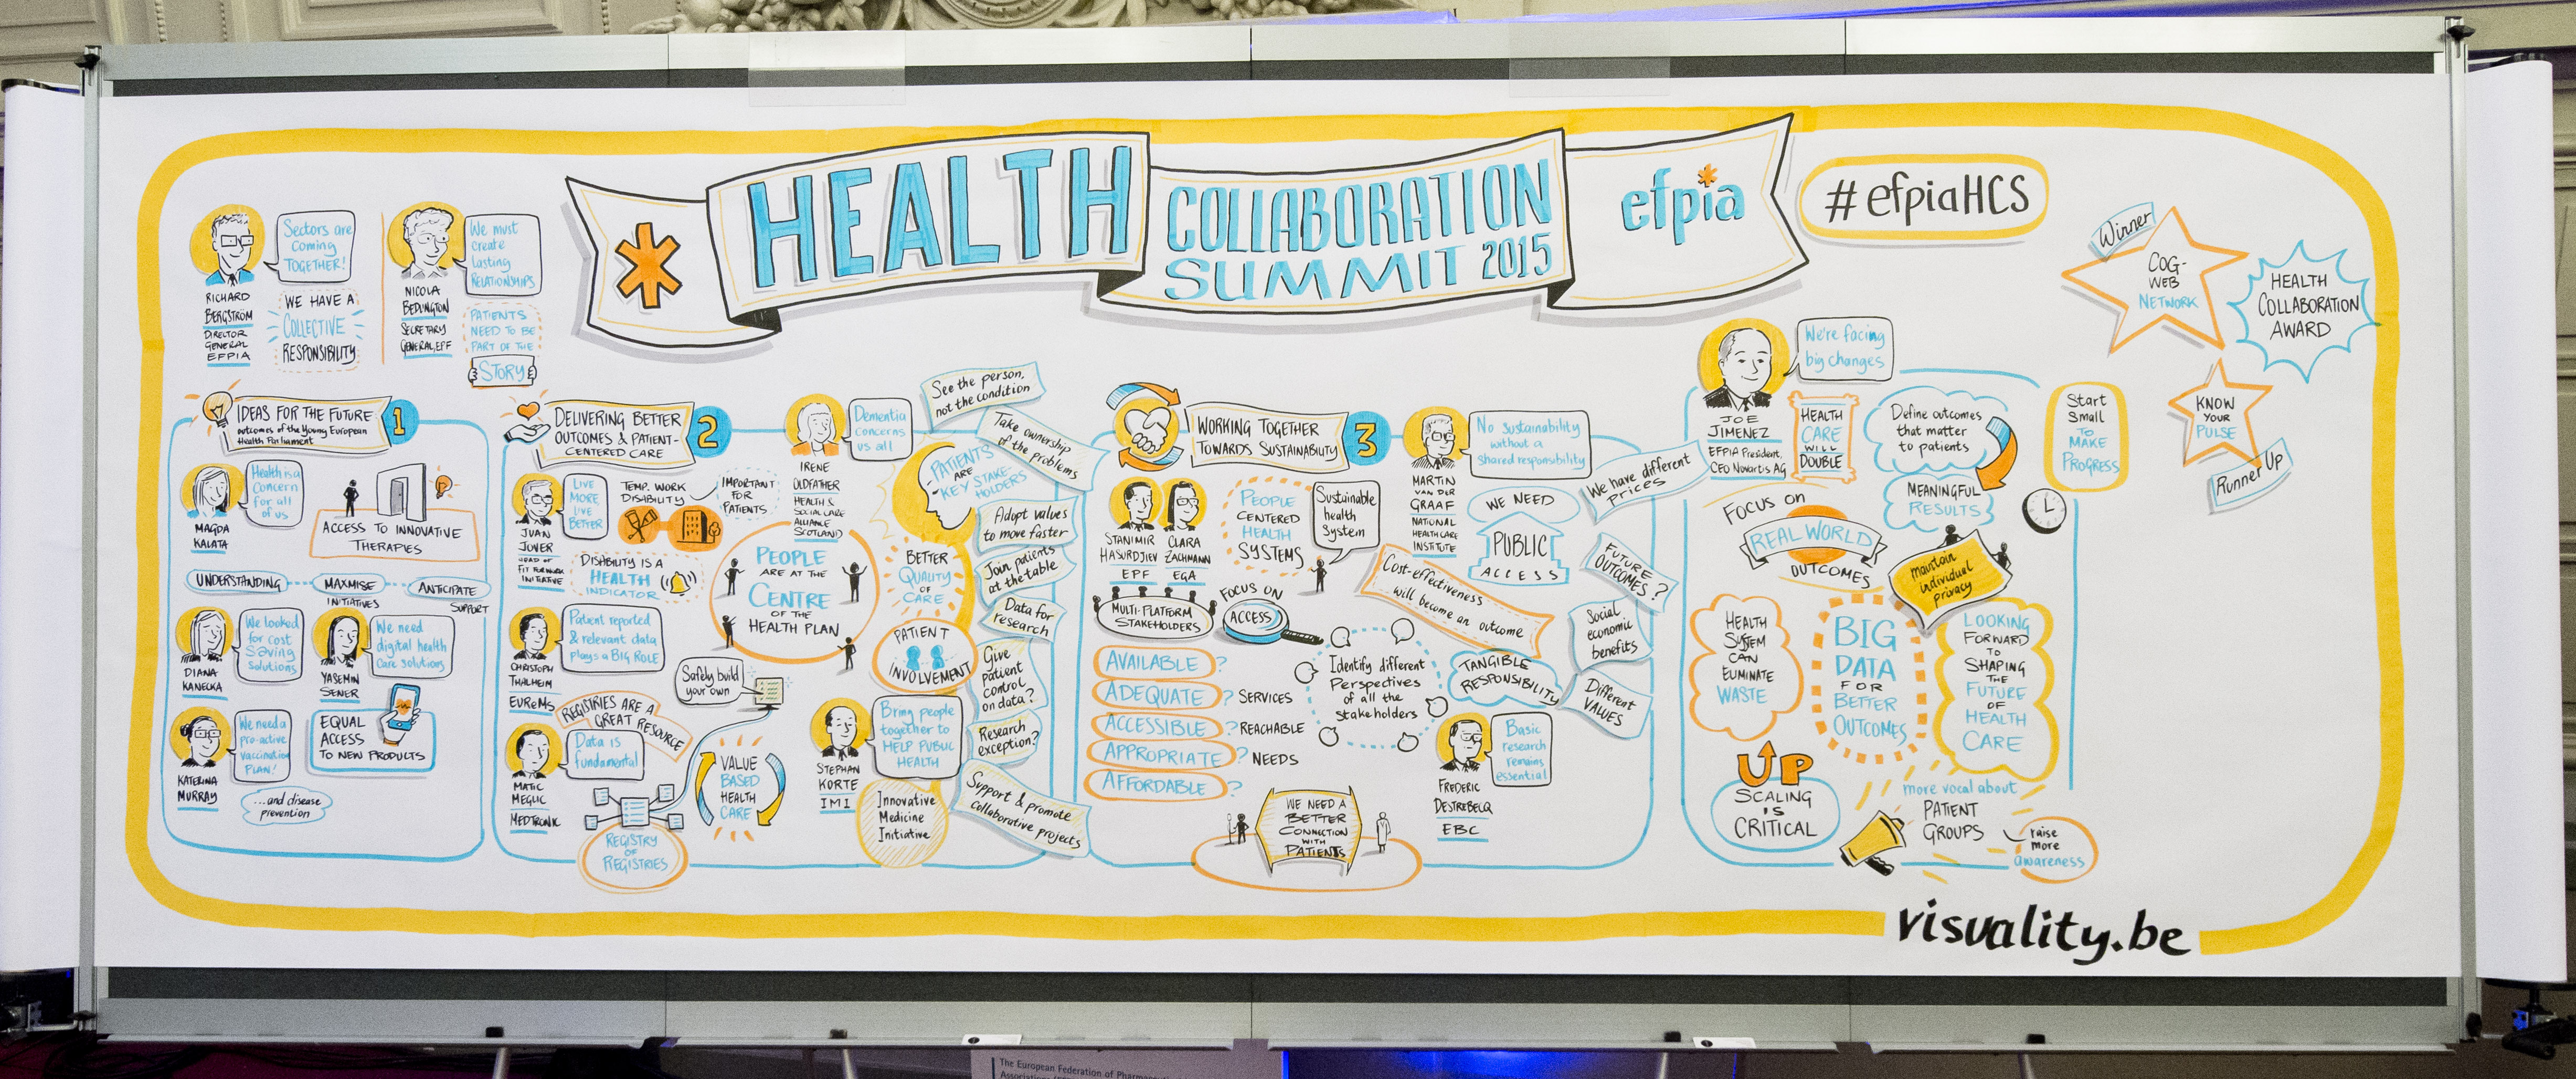 EFPIA Health Collaboration Summit 2015